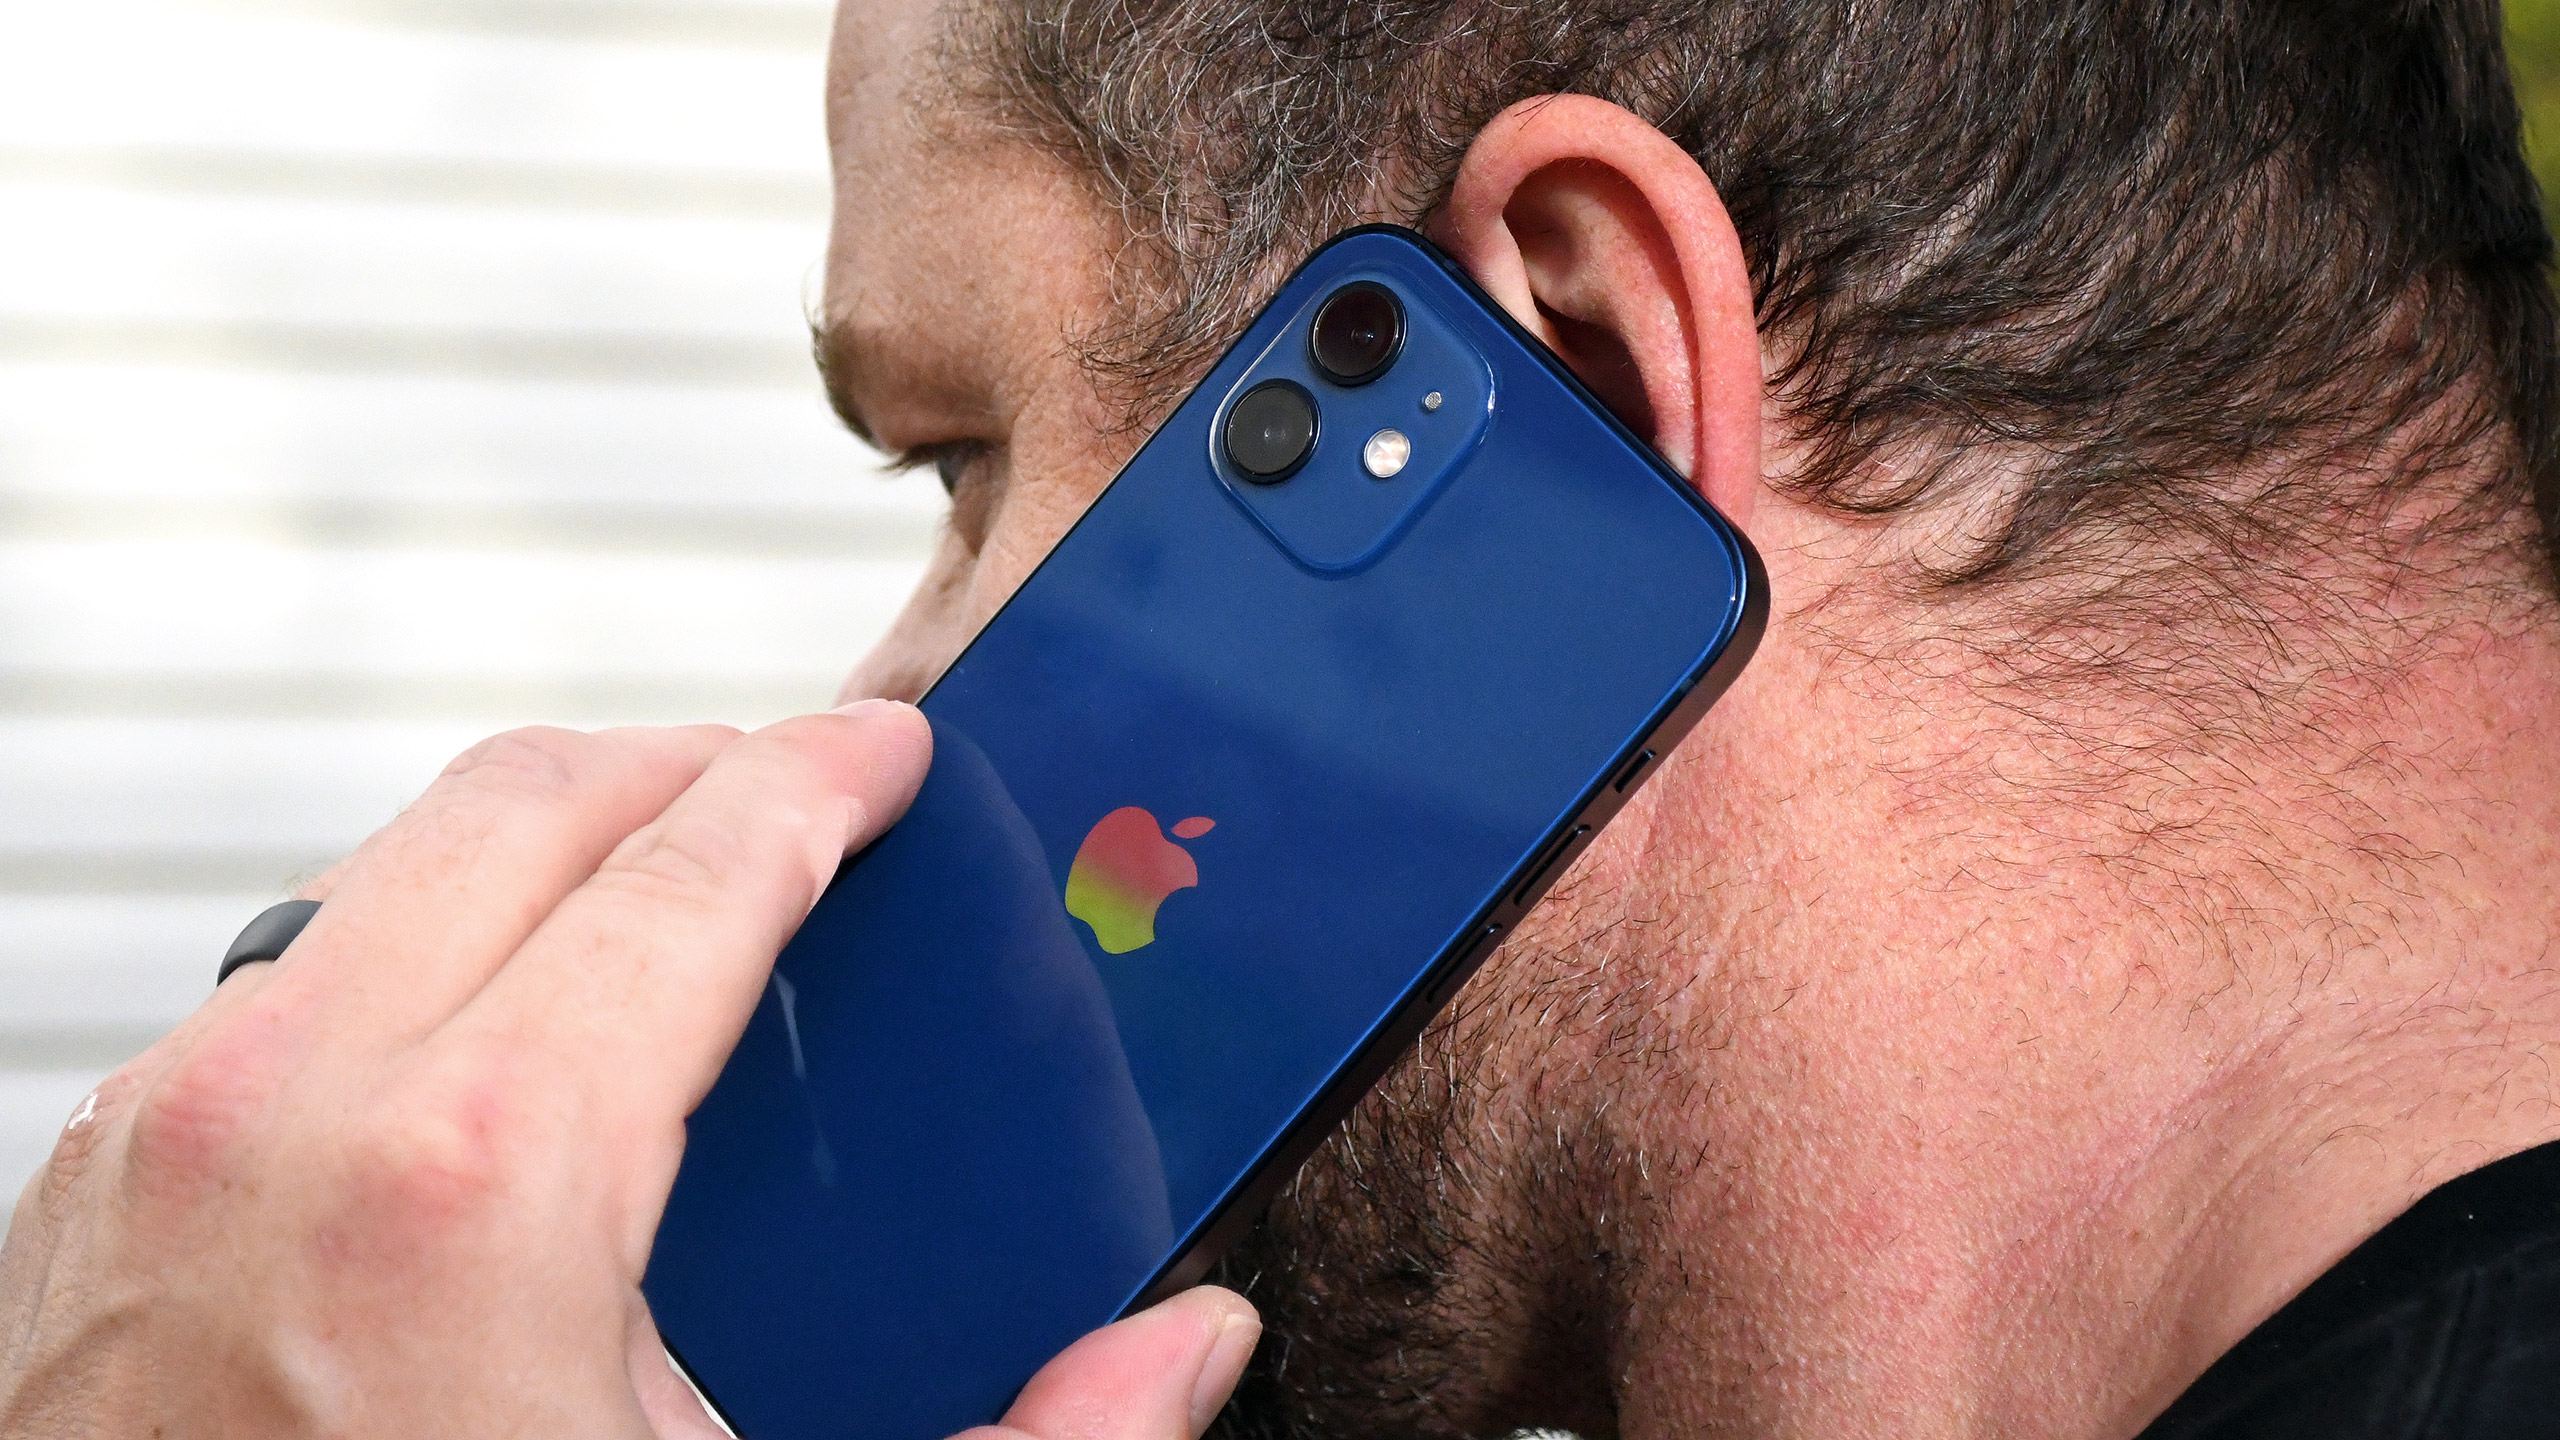 A man making a phone call on a blue iPhone 12